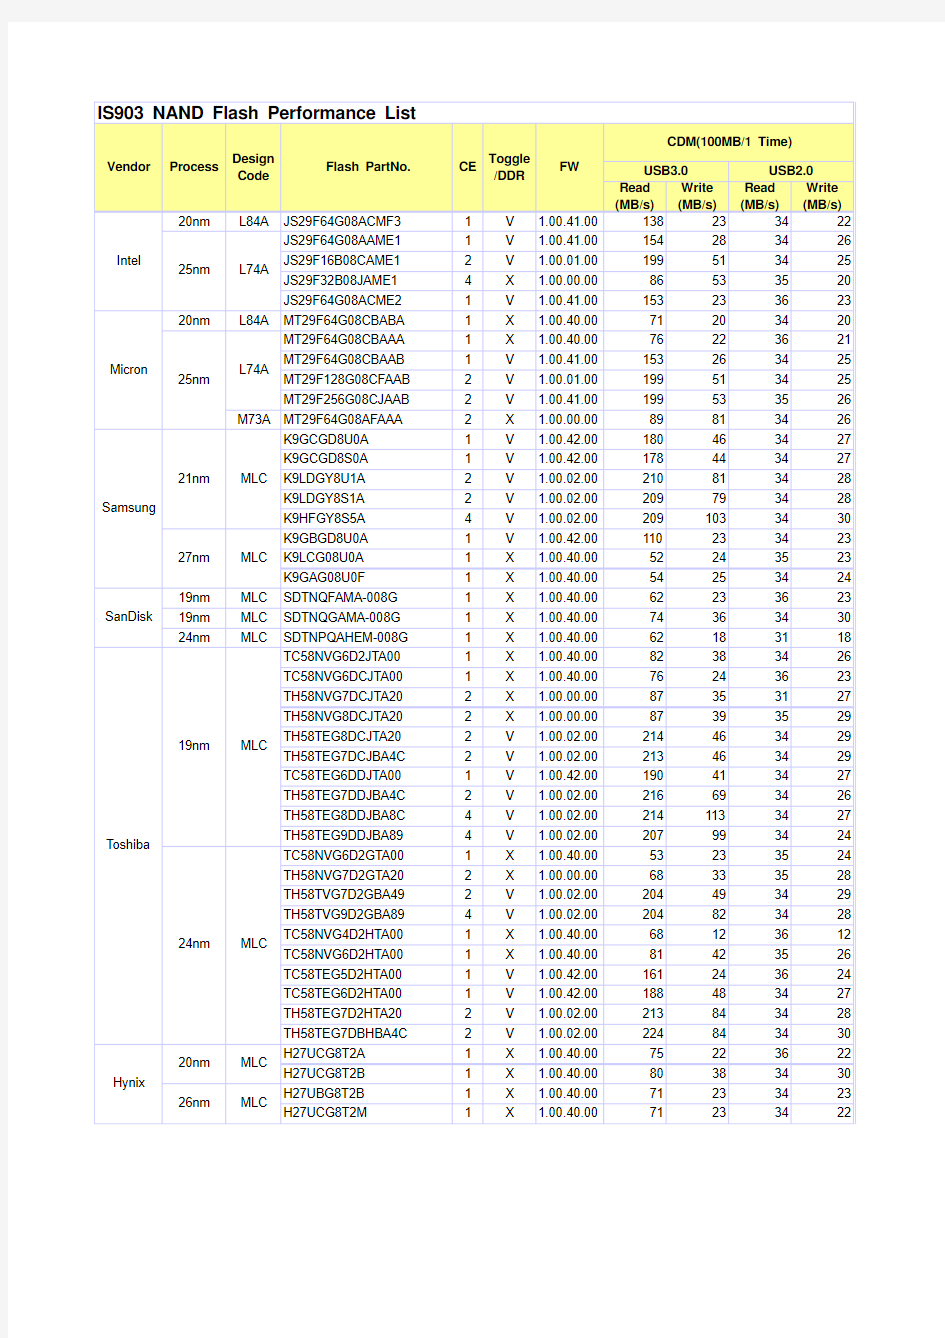 IS903 NAND Flash Performance List_V1.0.0